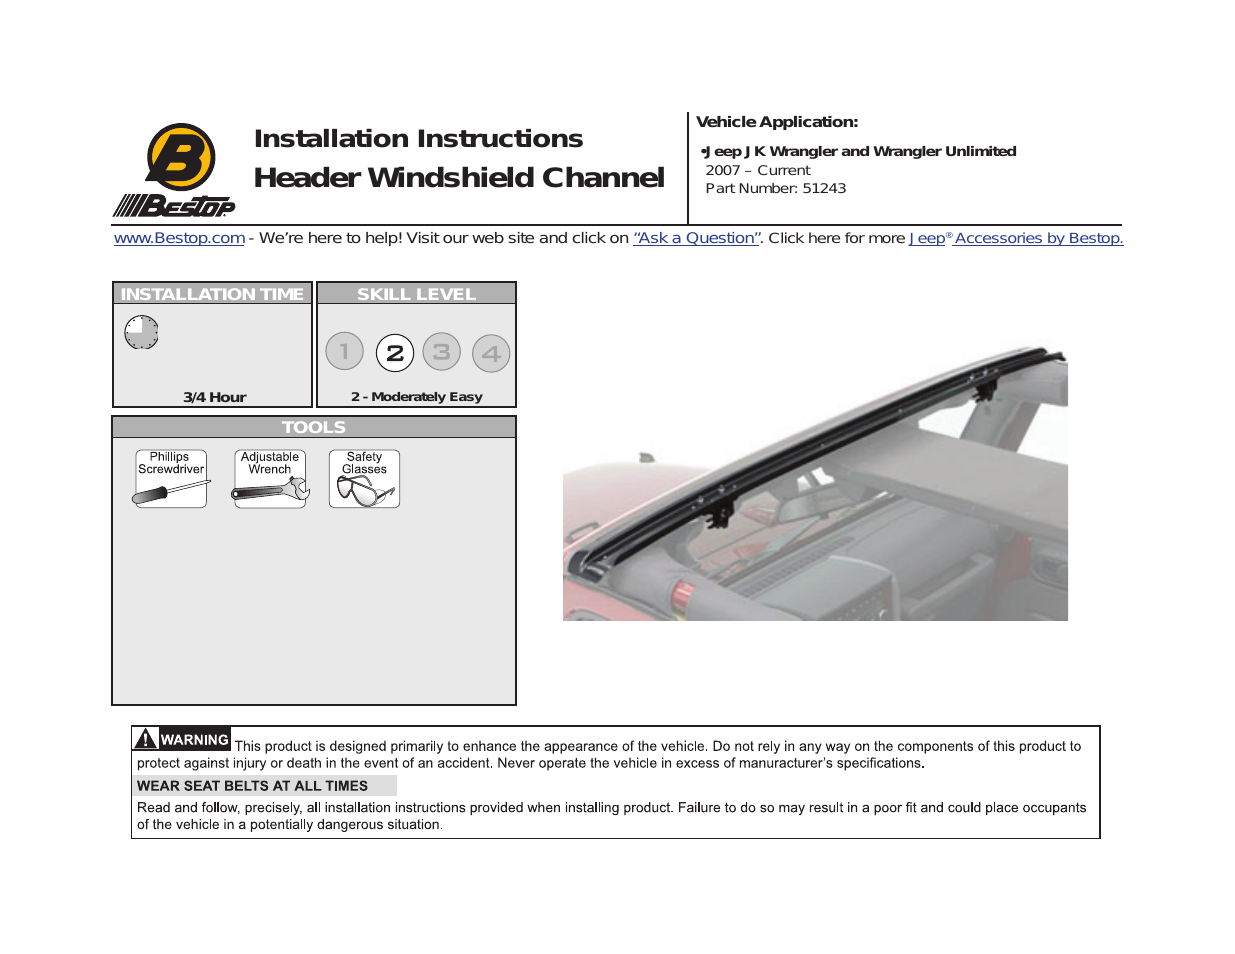 Windshield Channel for Jeep JK Wrangler and Wrangler Unlimited (Part Number 51243)